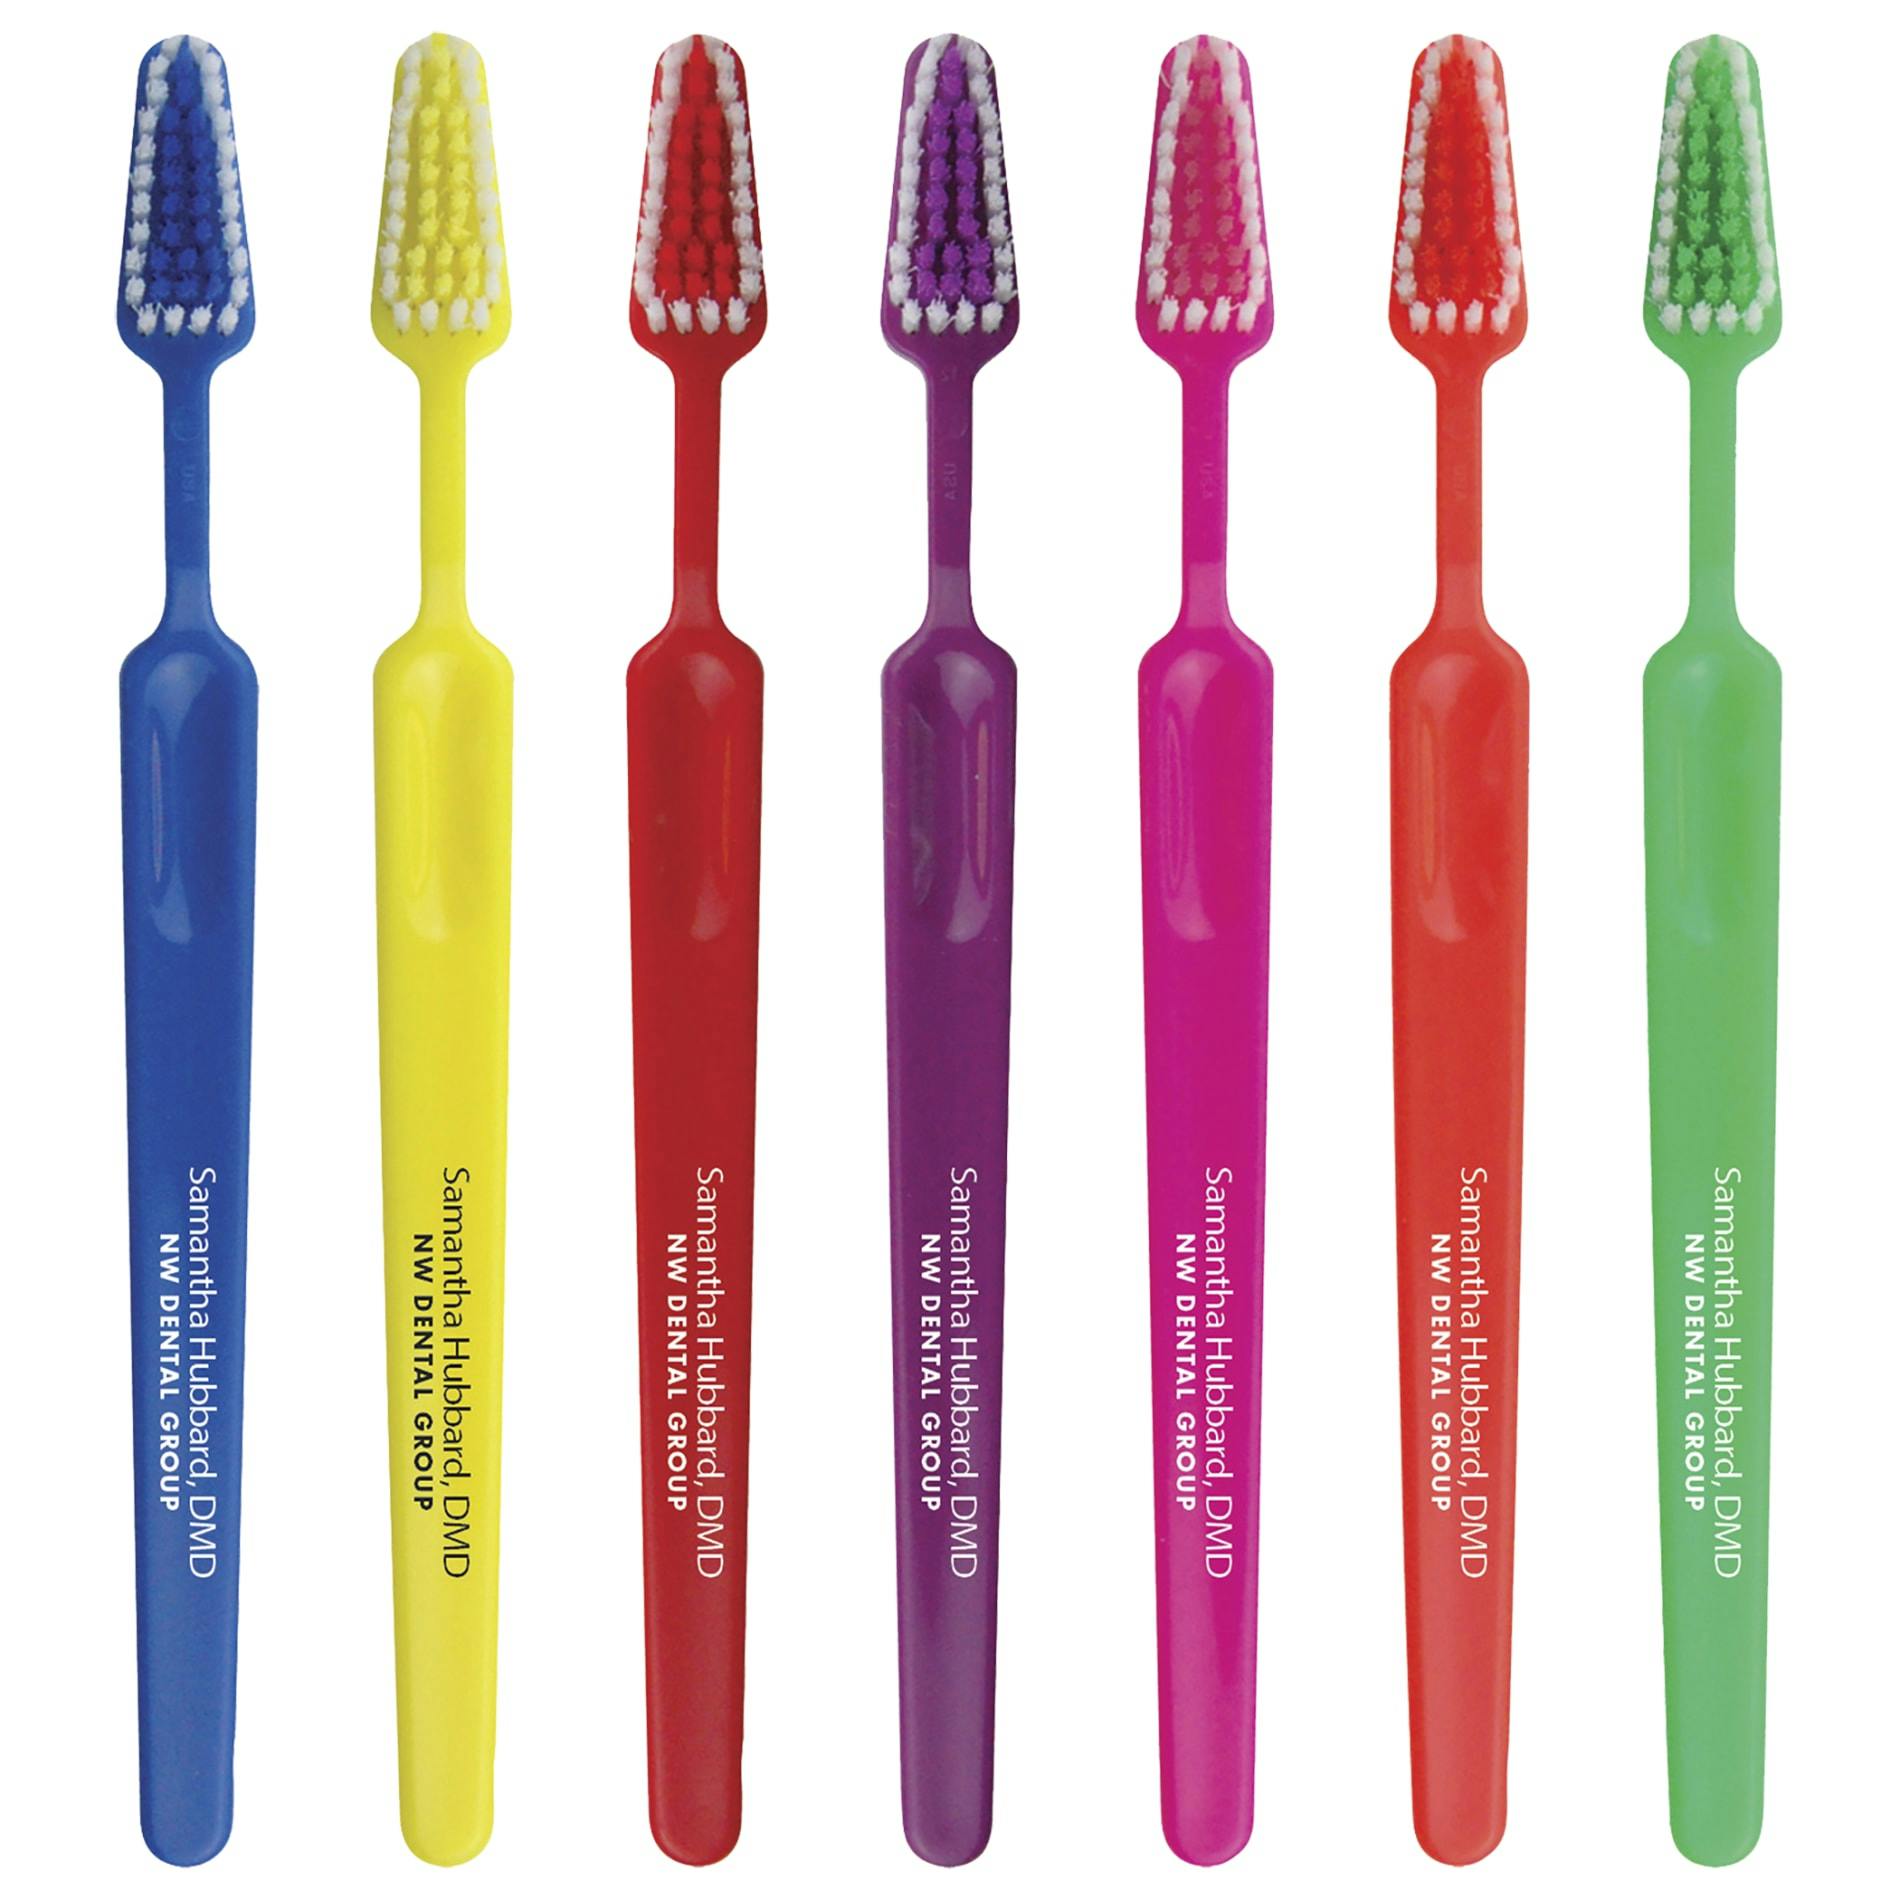 Signature Soft Toothbrush - additional Image 1